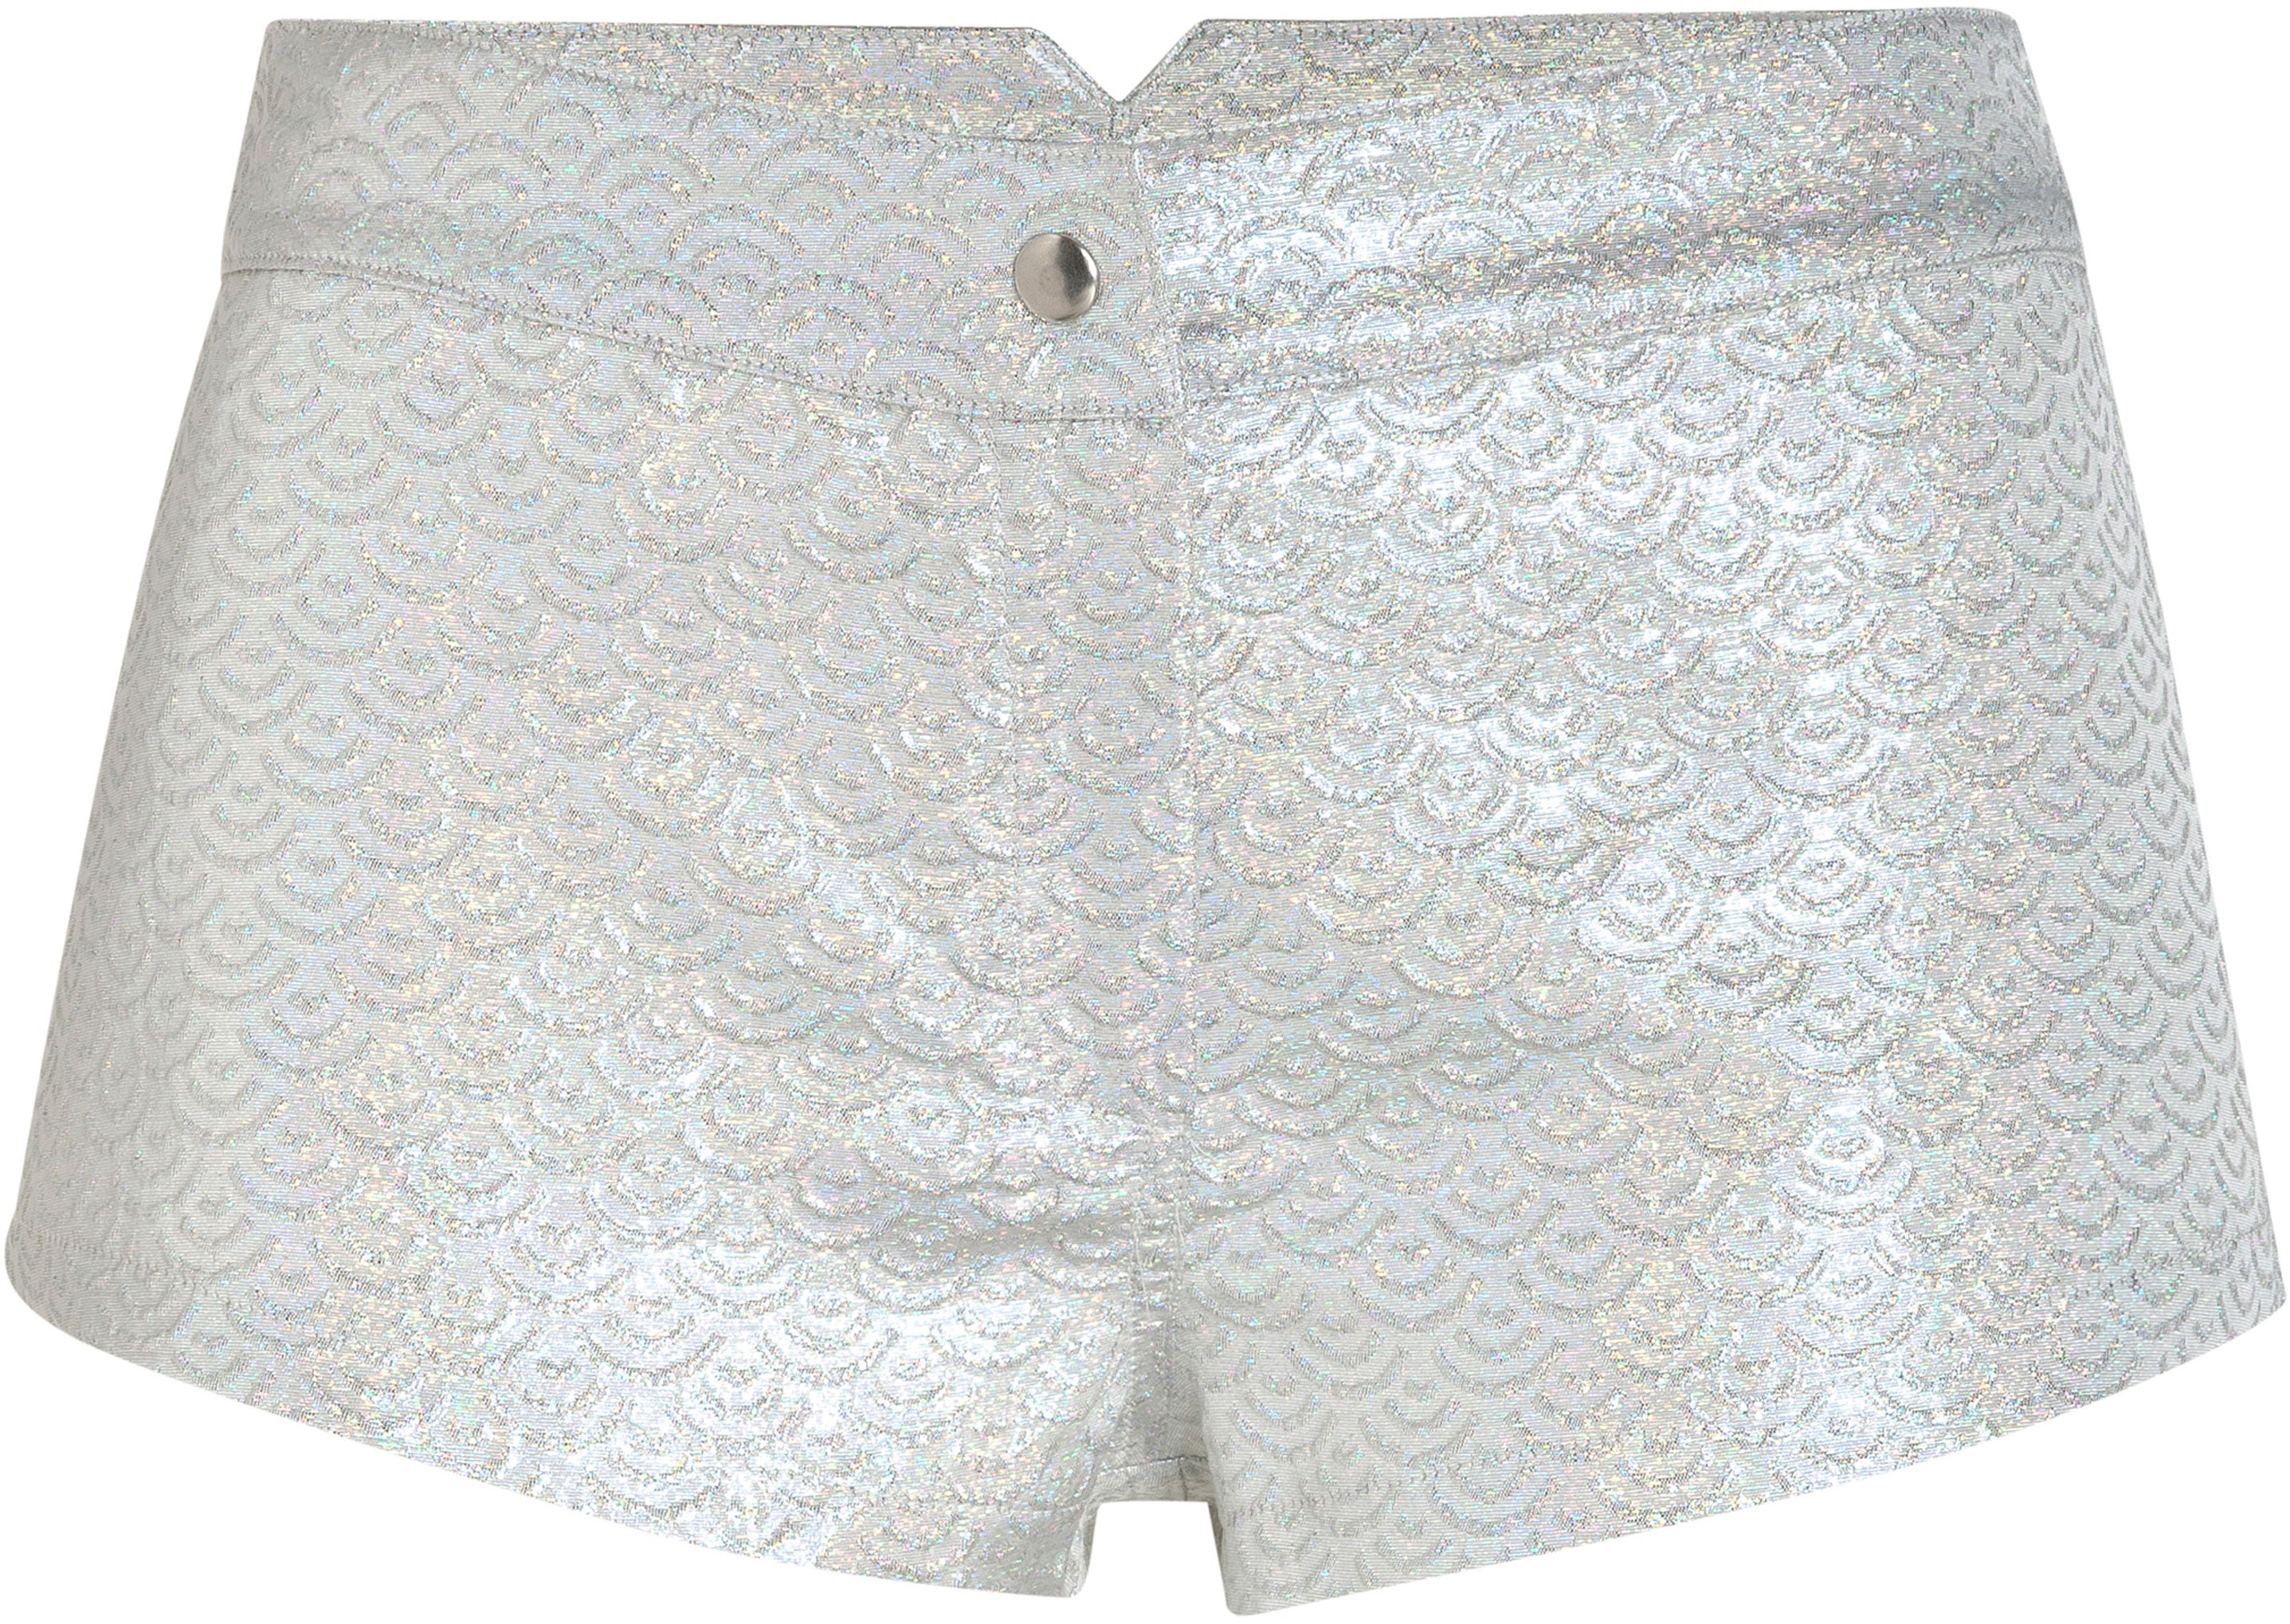 Eniqua - Silver Mermaid Hot Pants